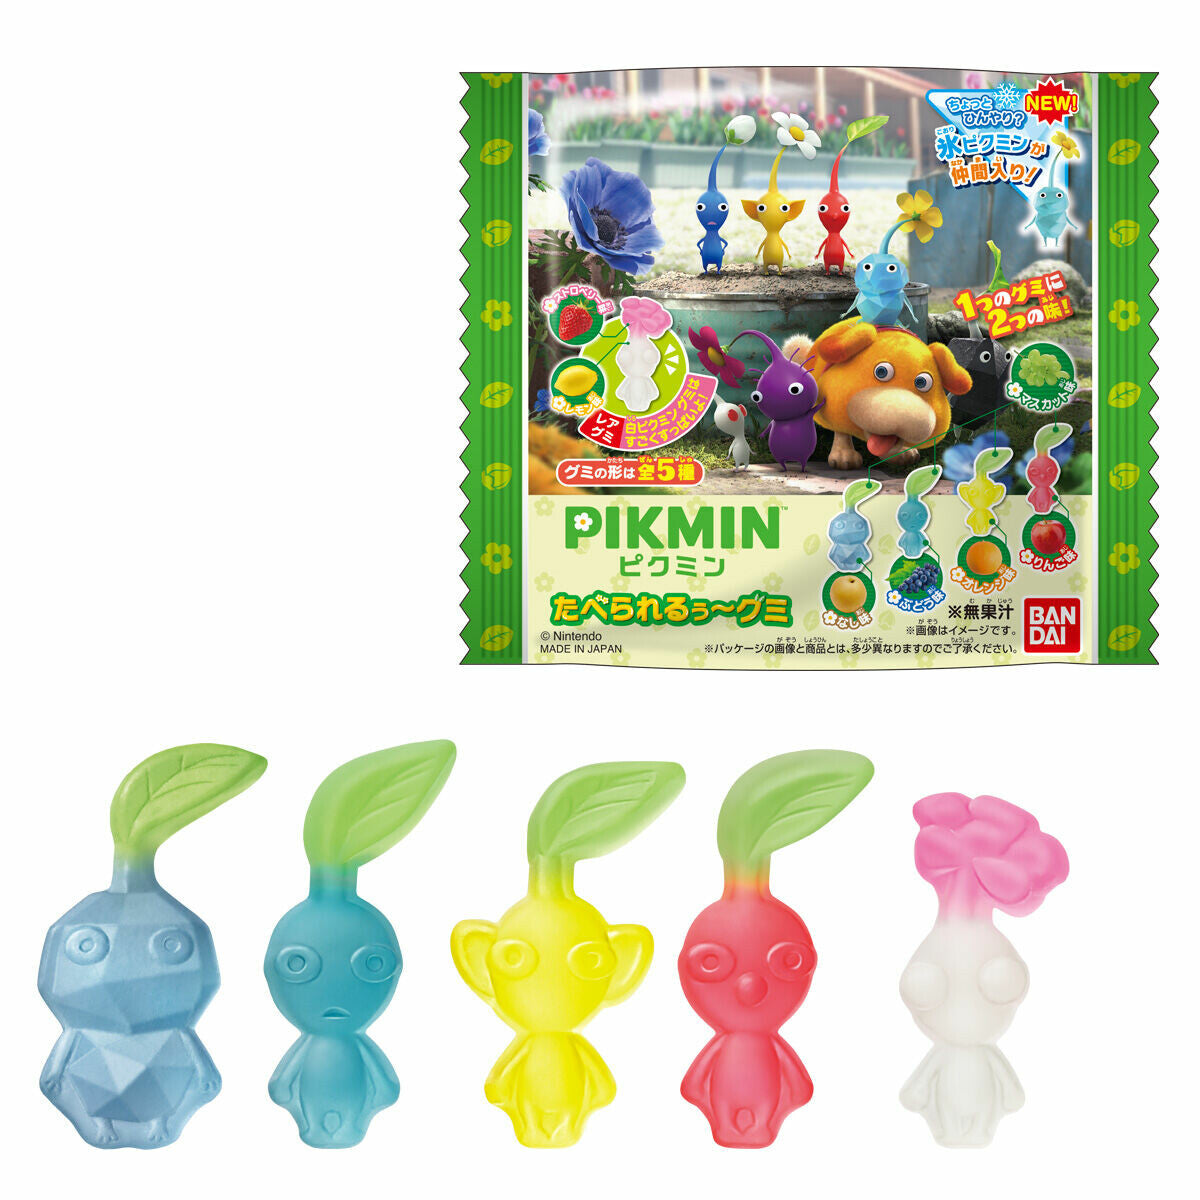 Bandai Pikmin Taberu-Gummy, 1 box (12packs)